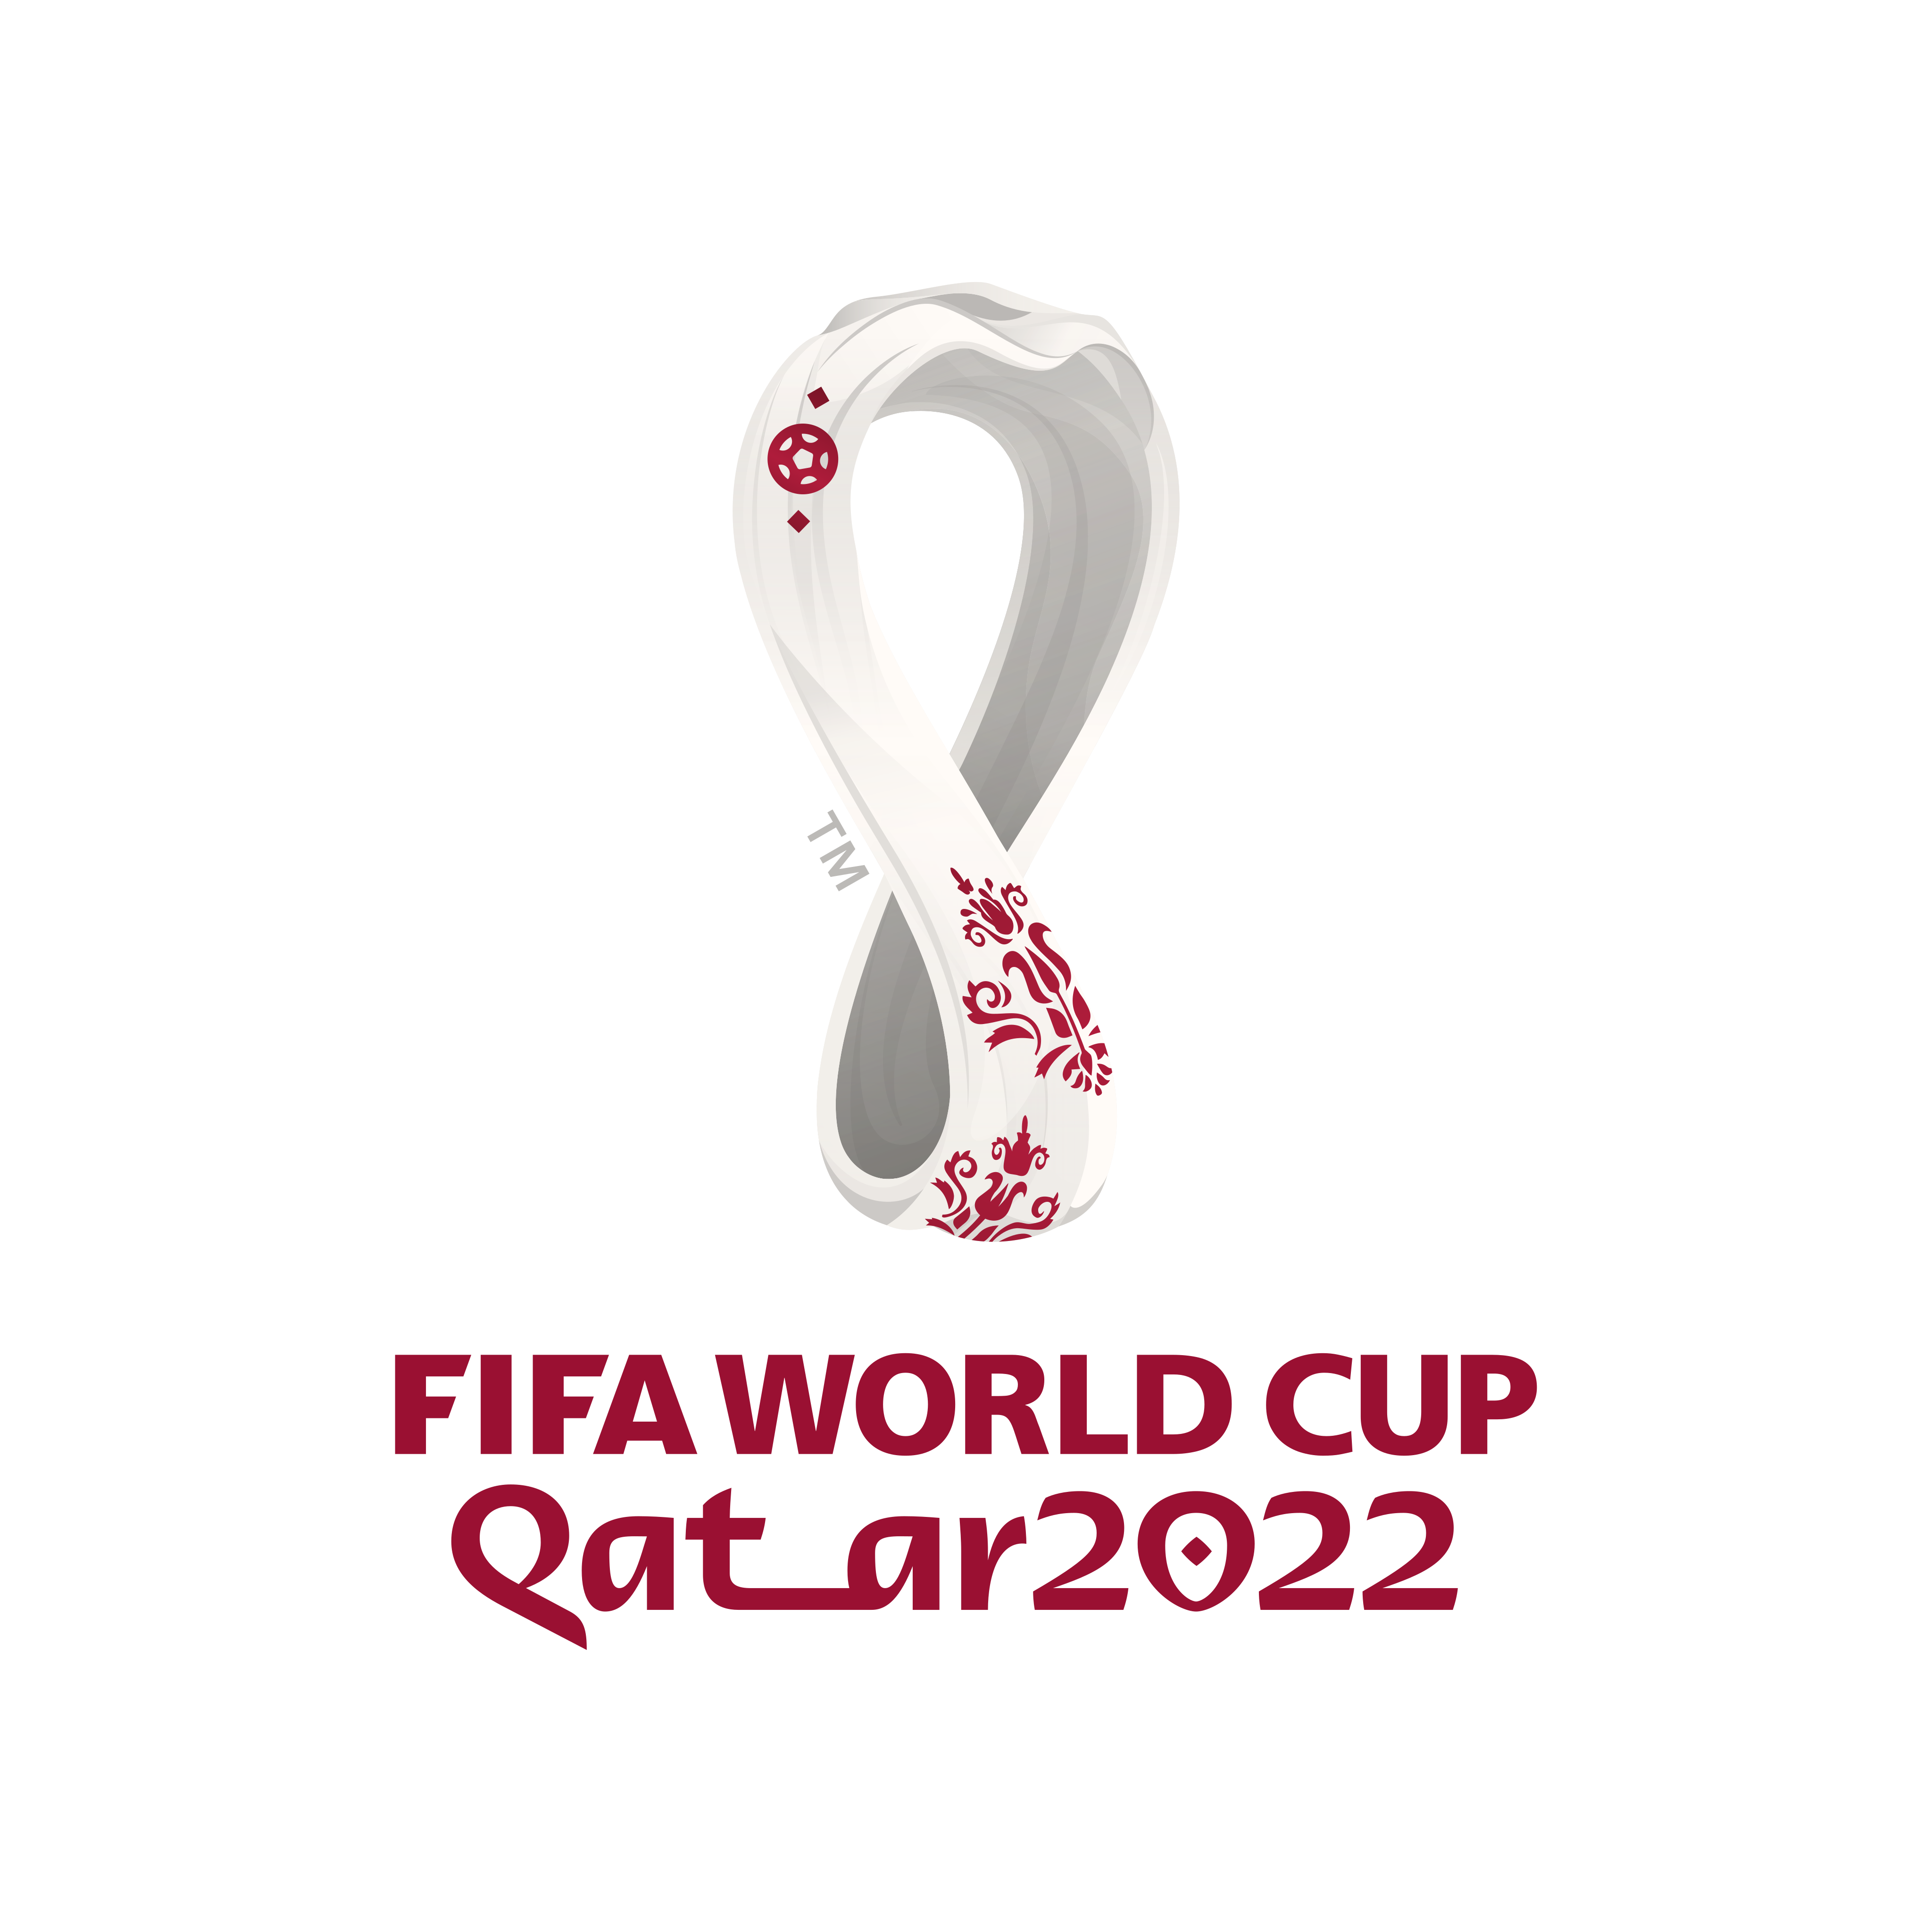 world cup 2022 logo 0 - World Cup Qatar 2022 Logo